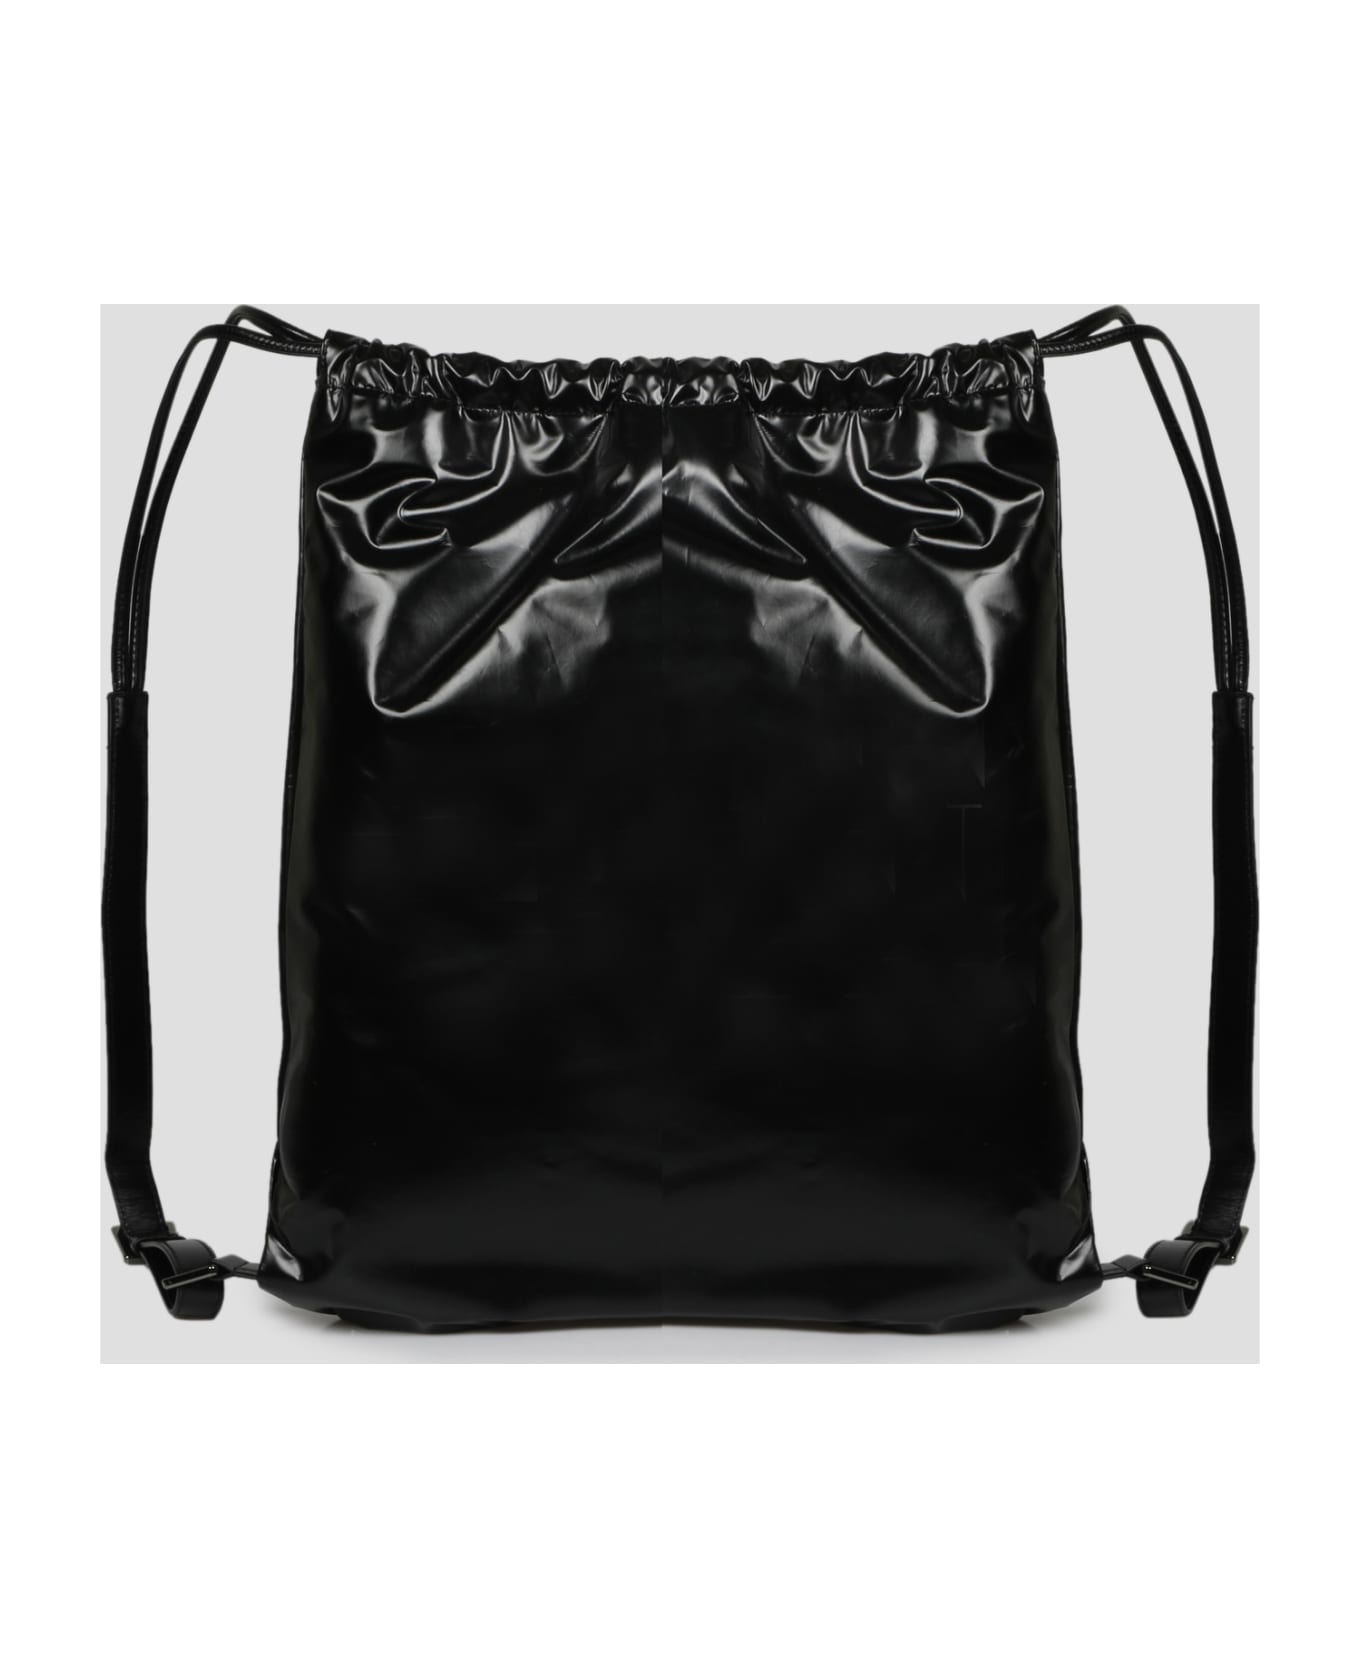 Valentino Garavani Vltn Soft Backpack - BLACK バックパック